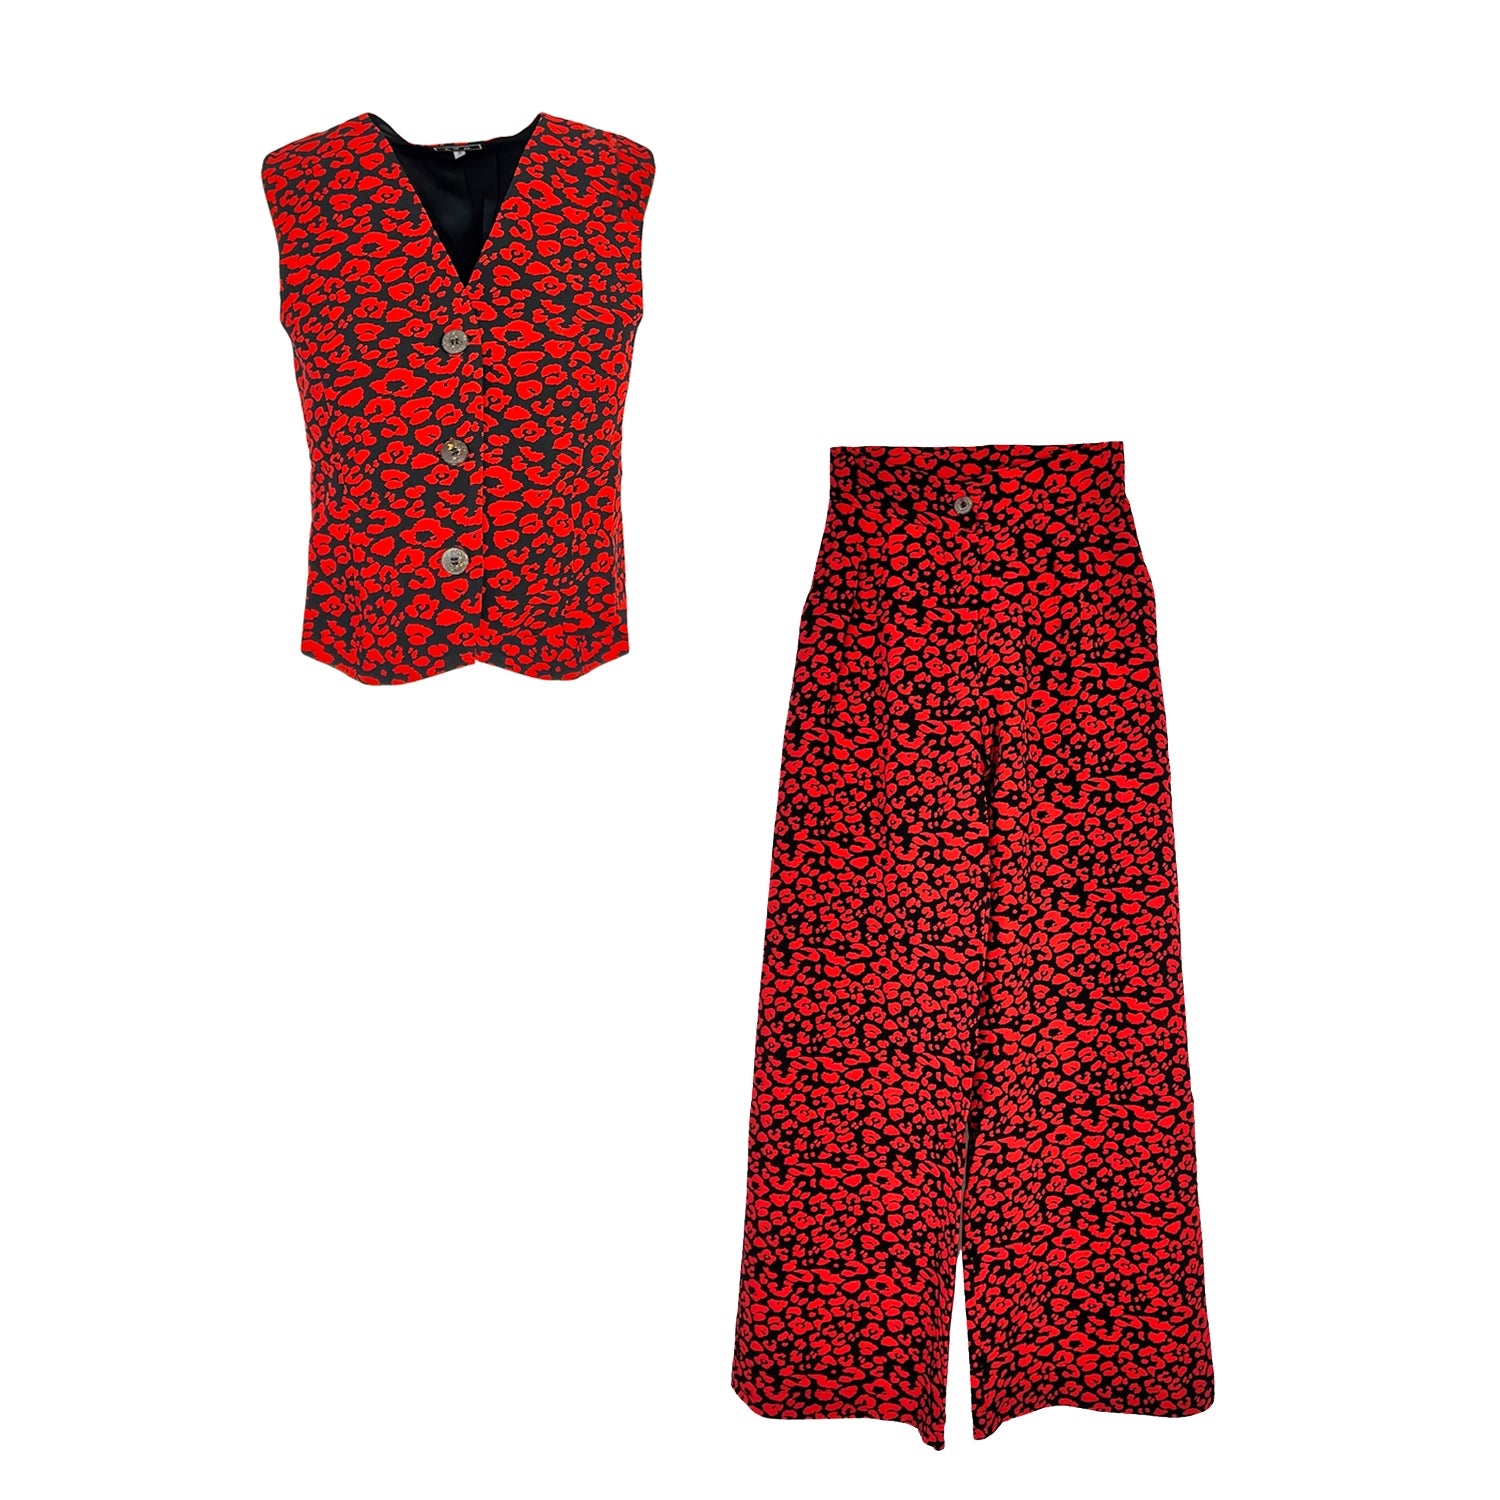 Wide-leg Pants - Black & Red Animal Print